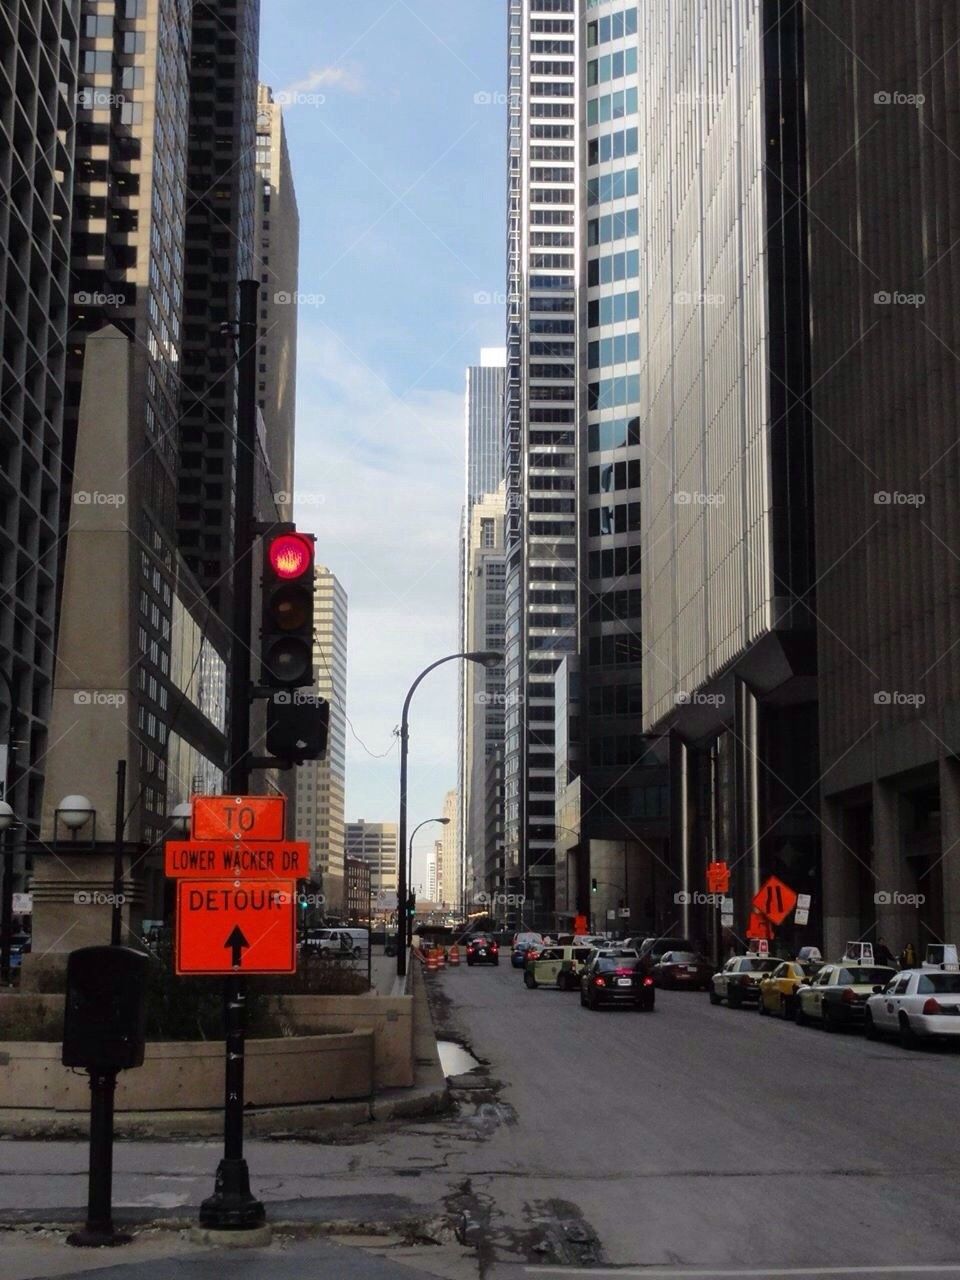 Chicago Street - Detour